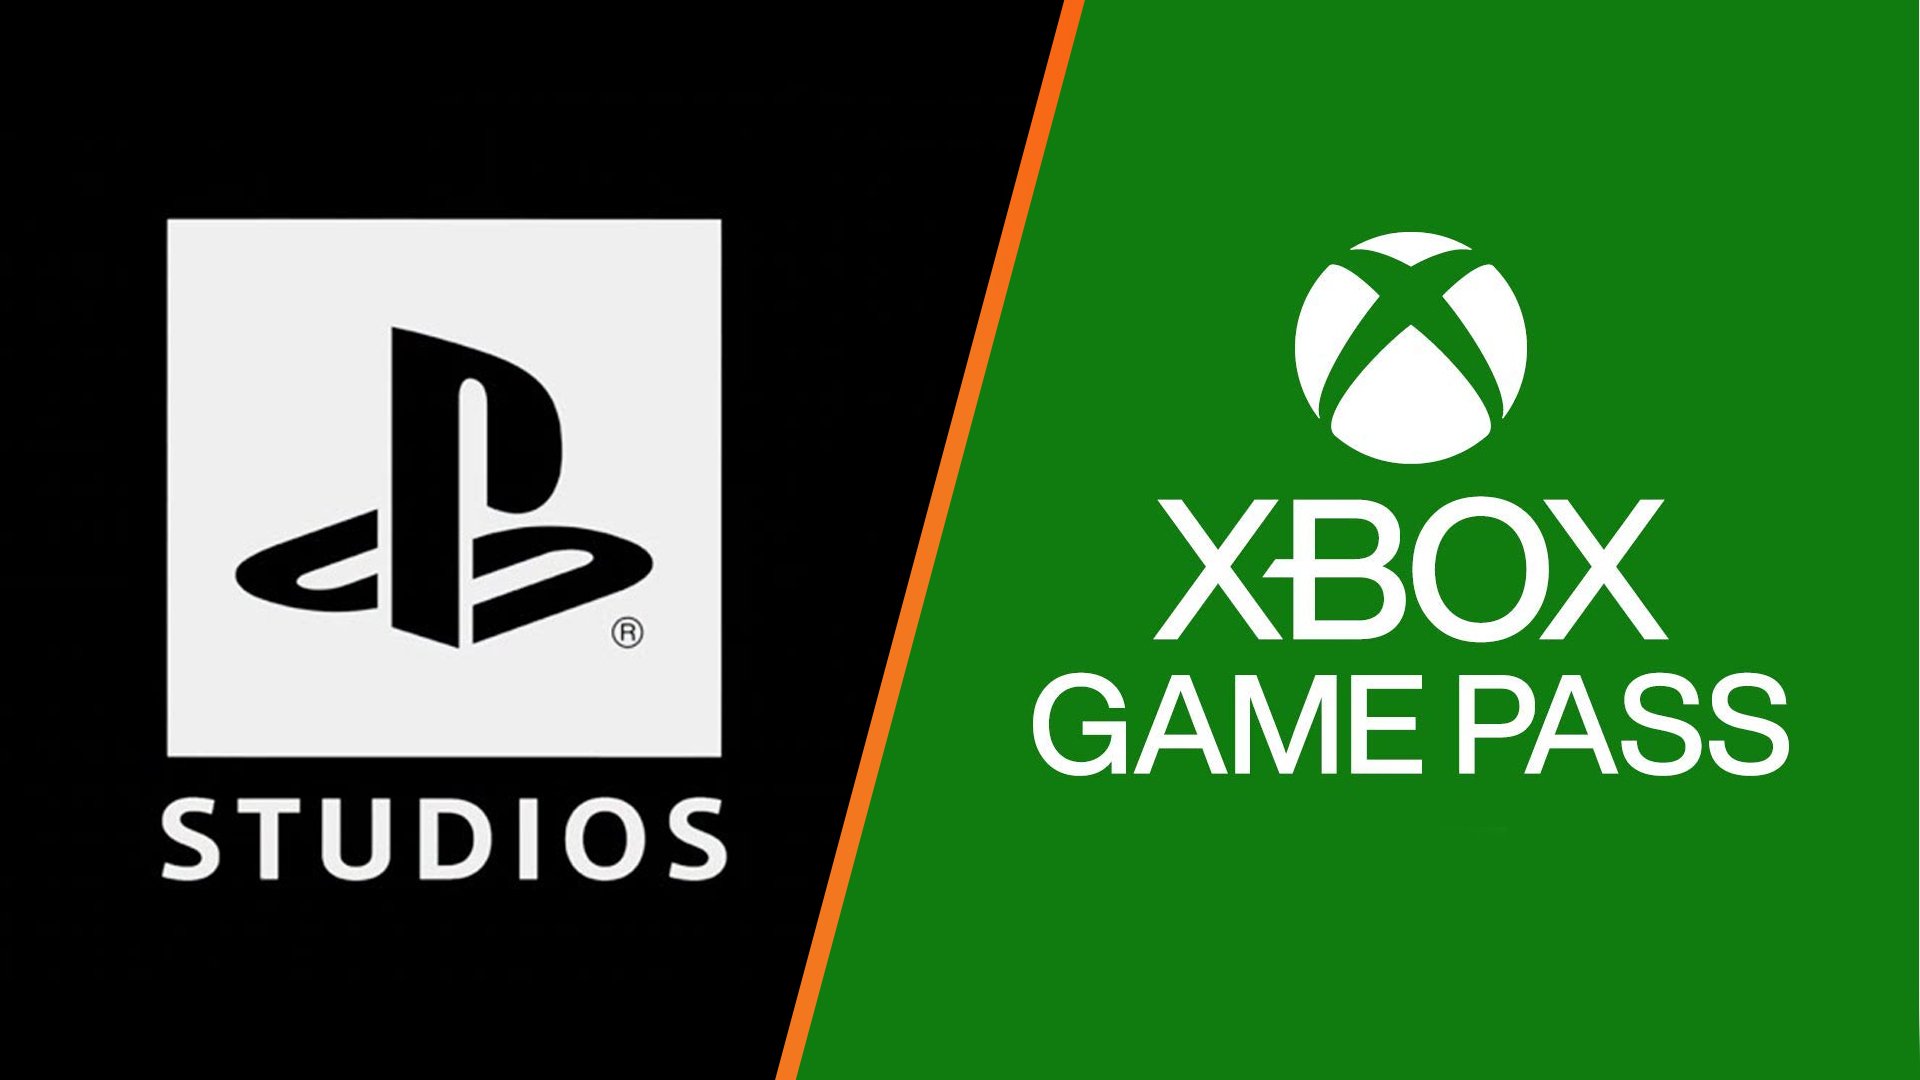 Xbox Game Studios VS PlayStation Studios.